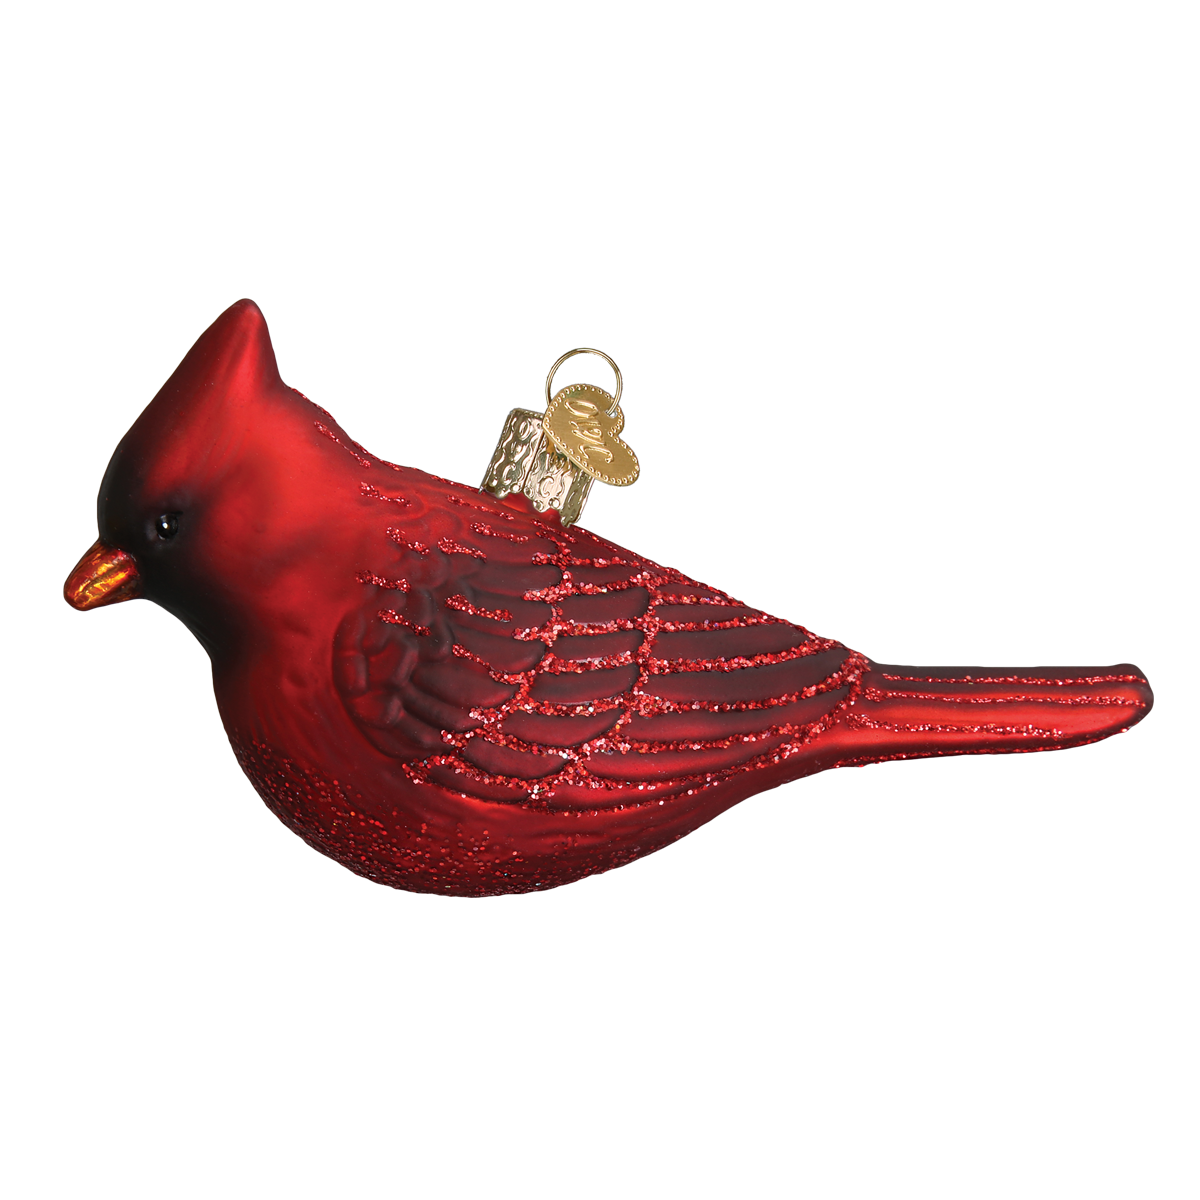 Old World Christmas - Northern Cardinal Ornament    